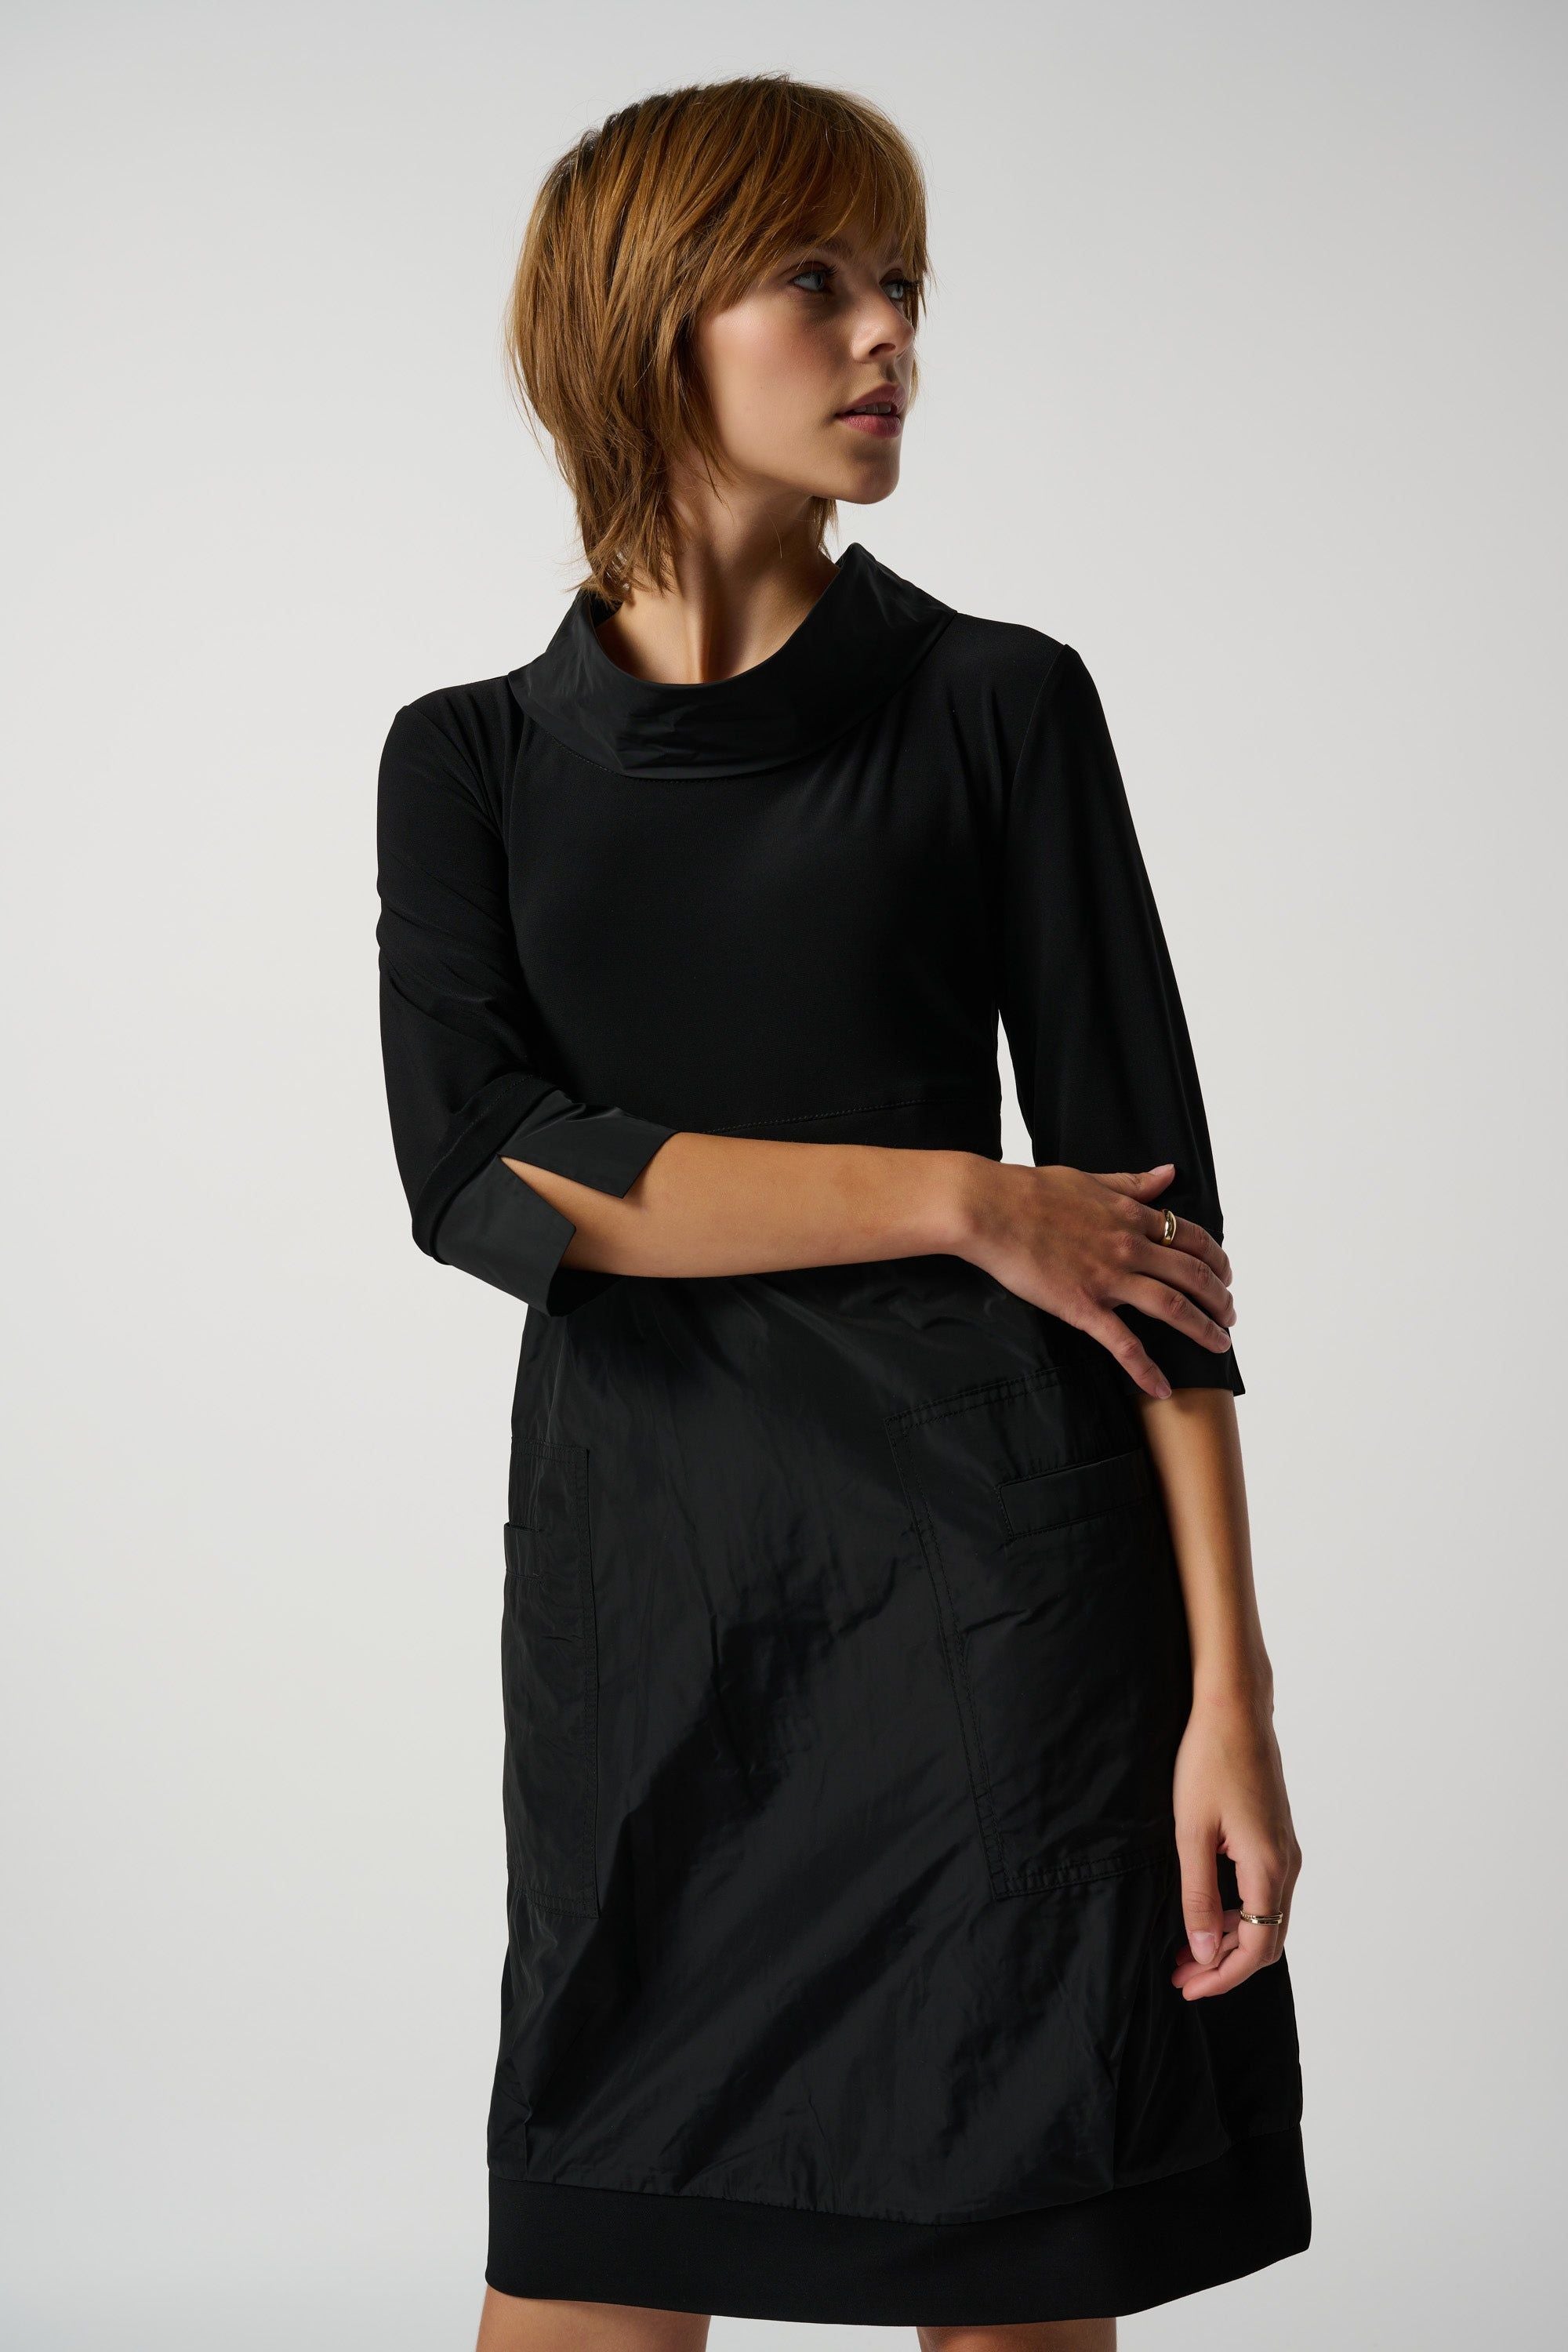 Joseph Ribkoff Miracle Dress - Style 173444TT, front2, black